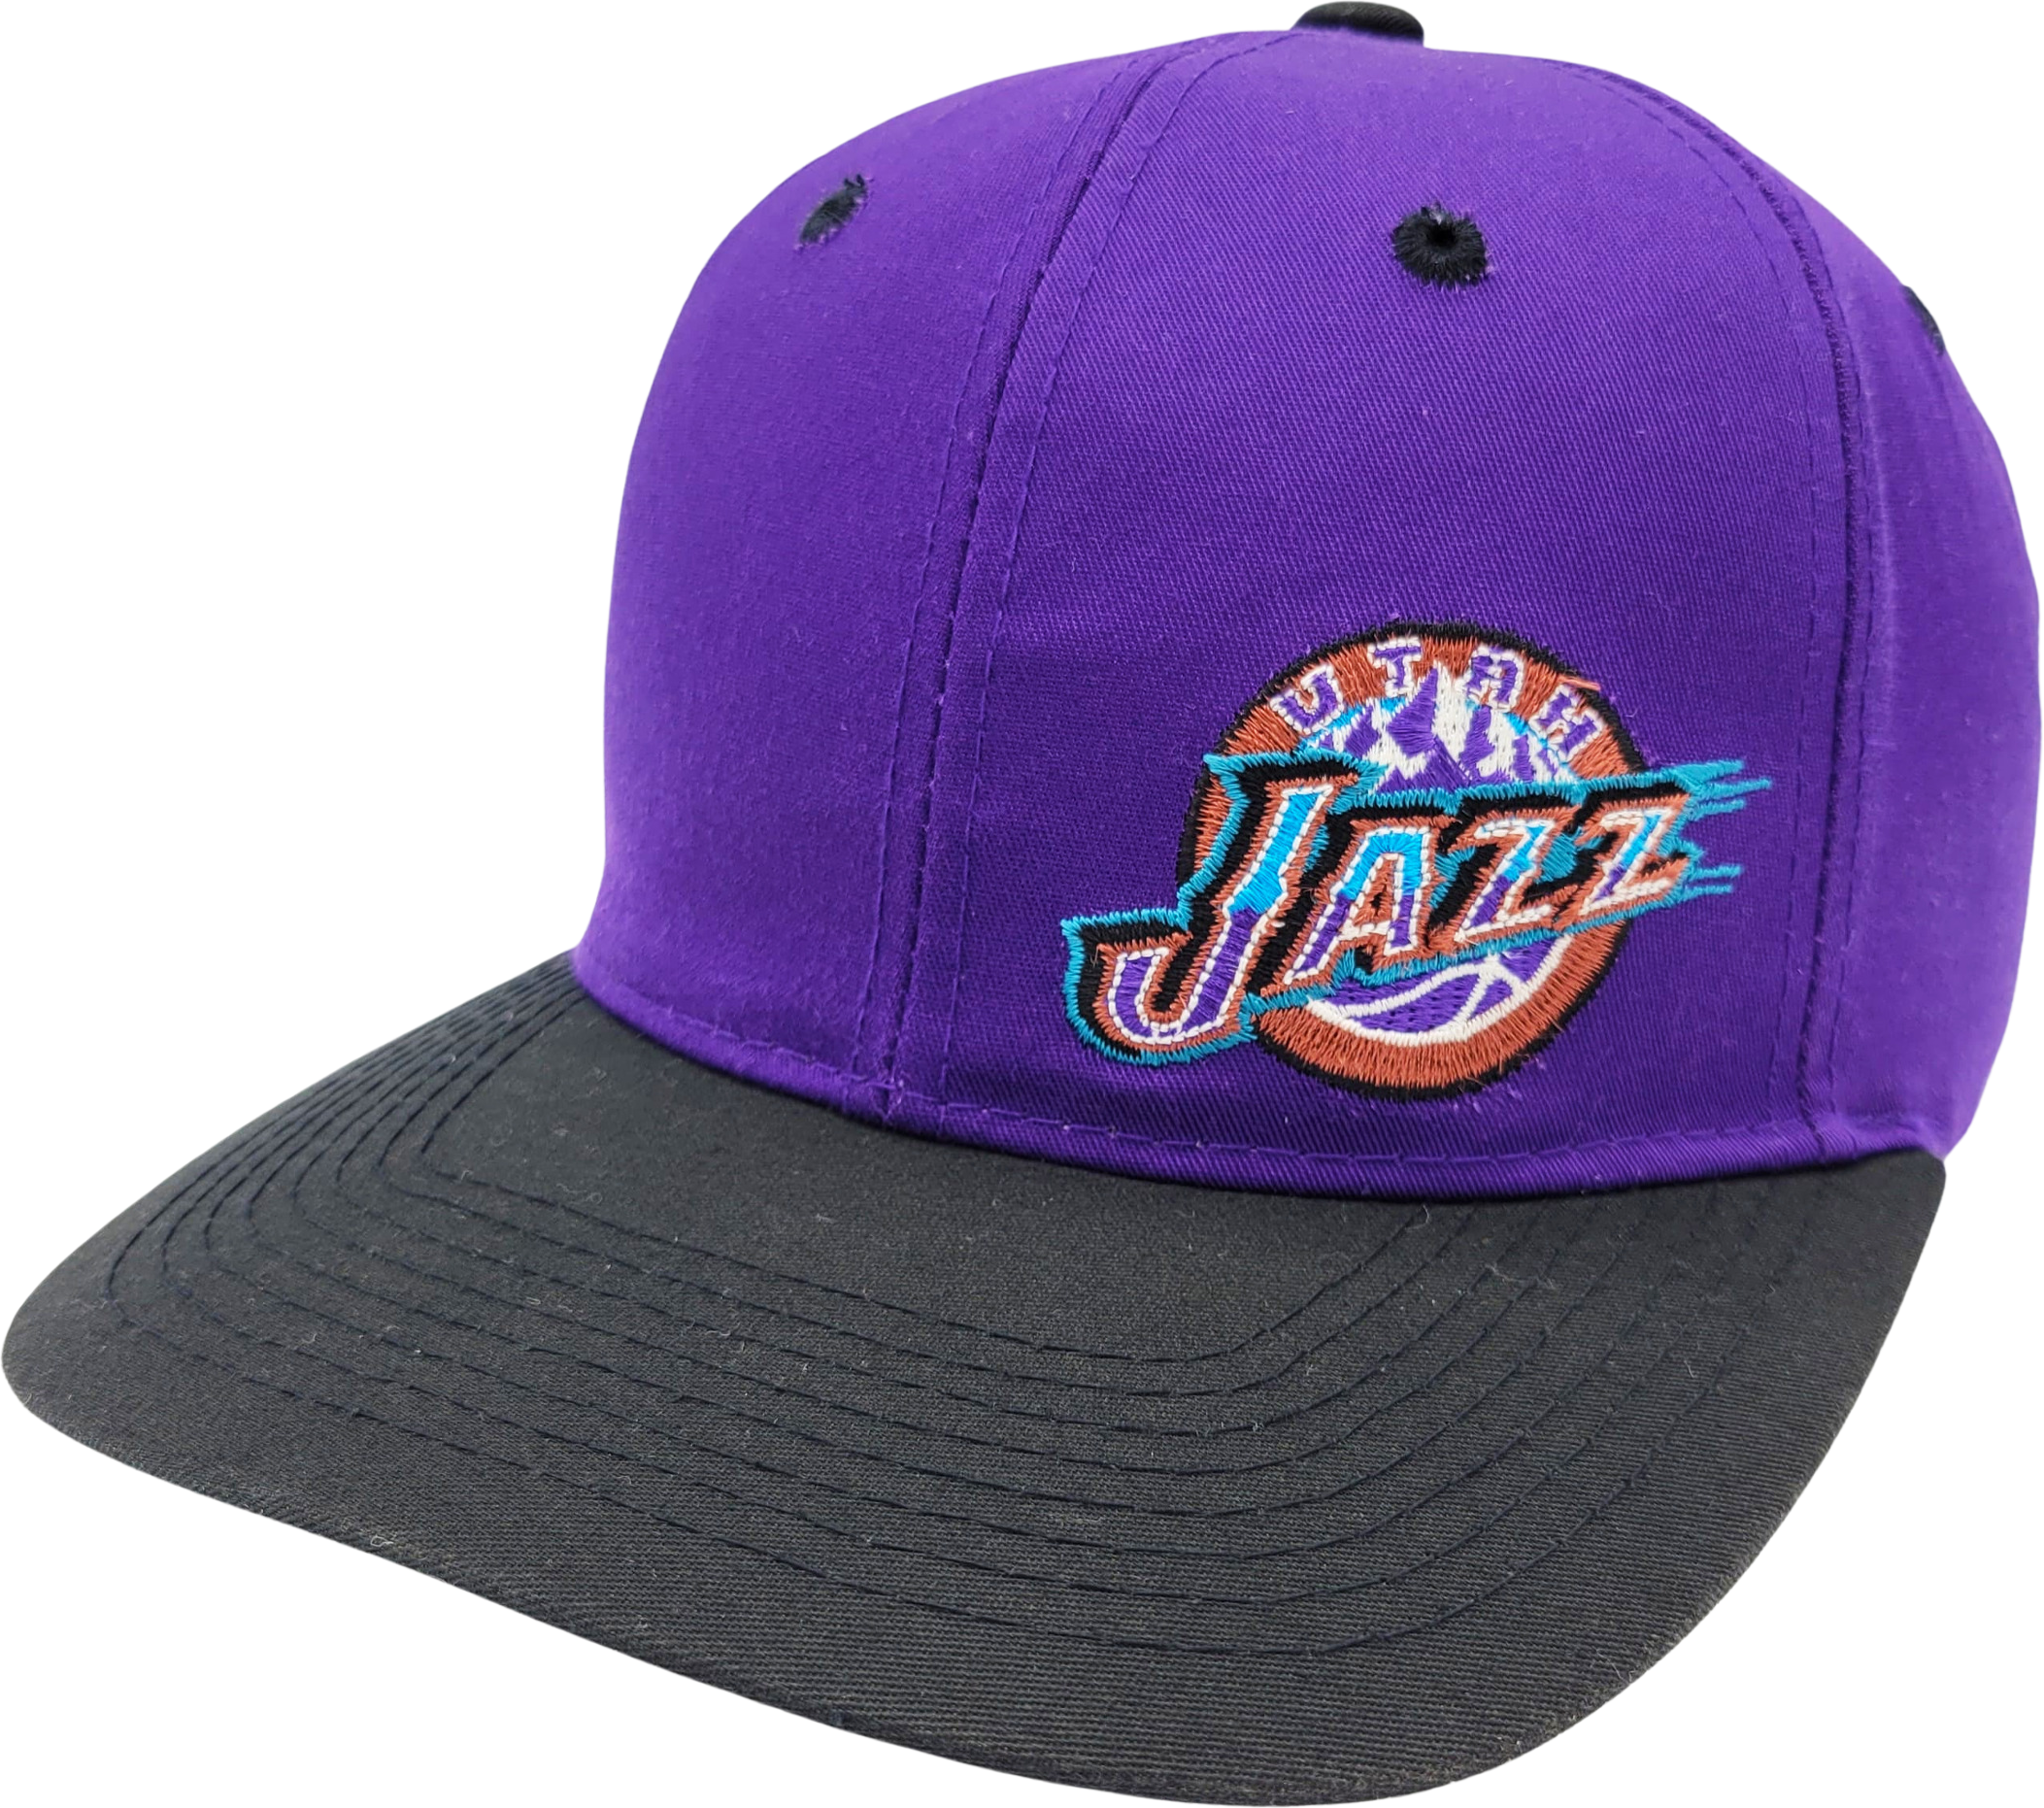 Vintage Utah Jazz Snapback Hat Cap The Game Big Logo NBA basketball Salt  Lake City Big 1990 90s Finals Stockton Malone